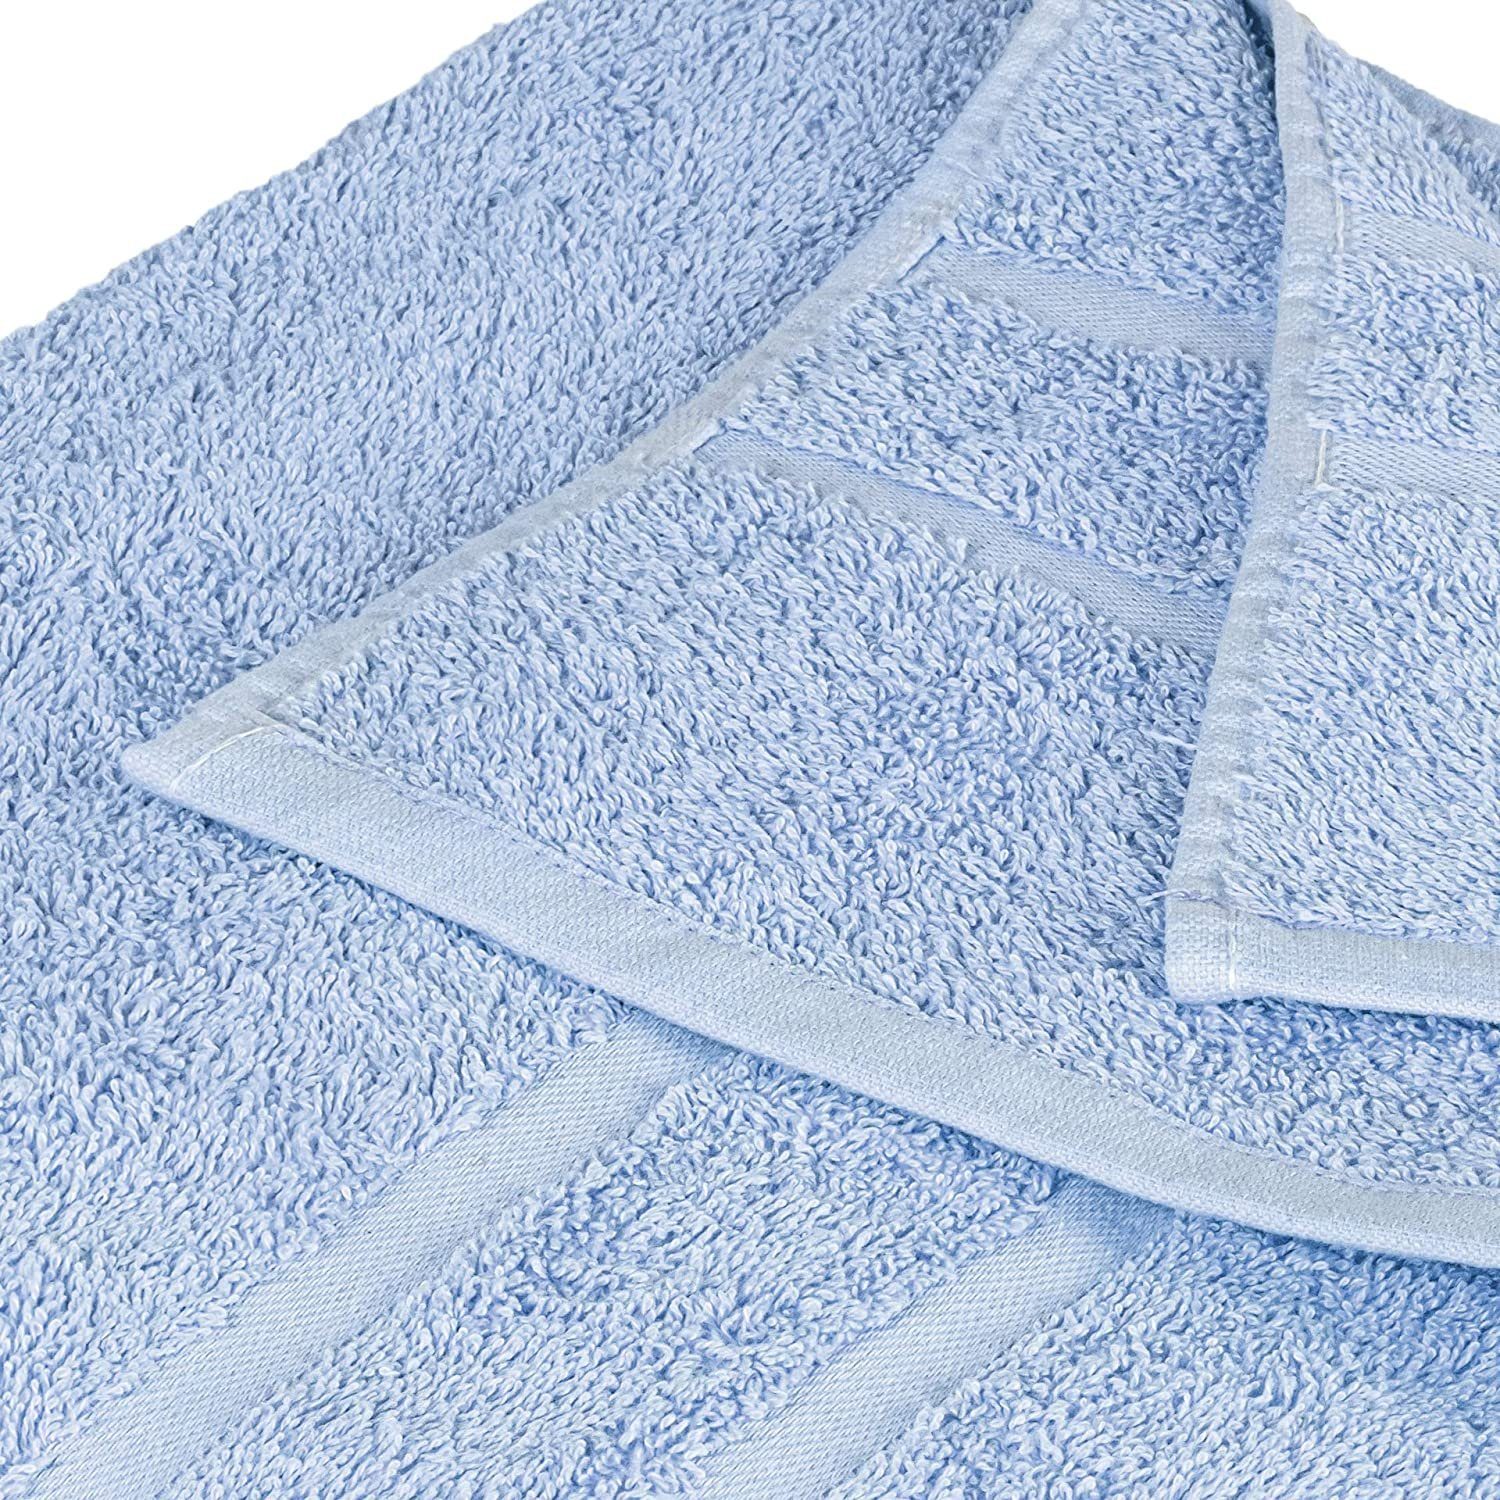 StickandShine Handtuch Handtücher Badetücher Saunatücher Duschtücher  Gästehandtücher in Hellblau zur Wahl 100% Baumwolle 500 GSM